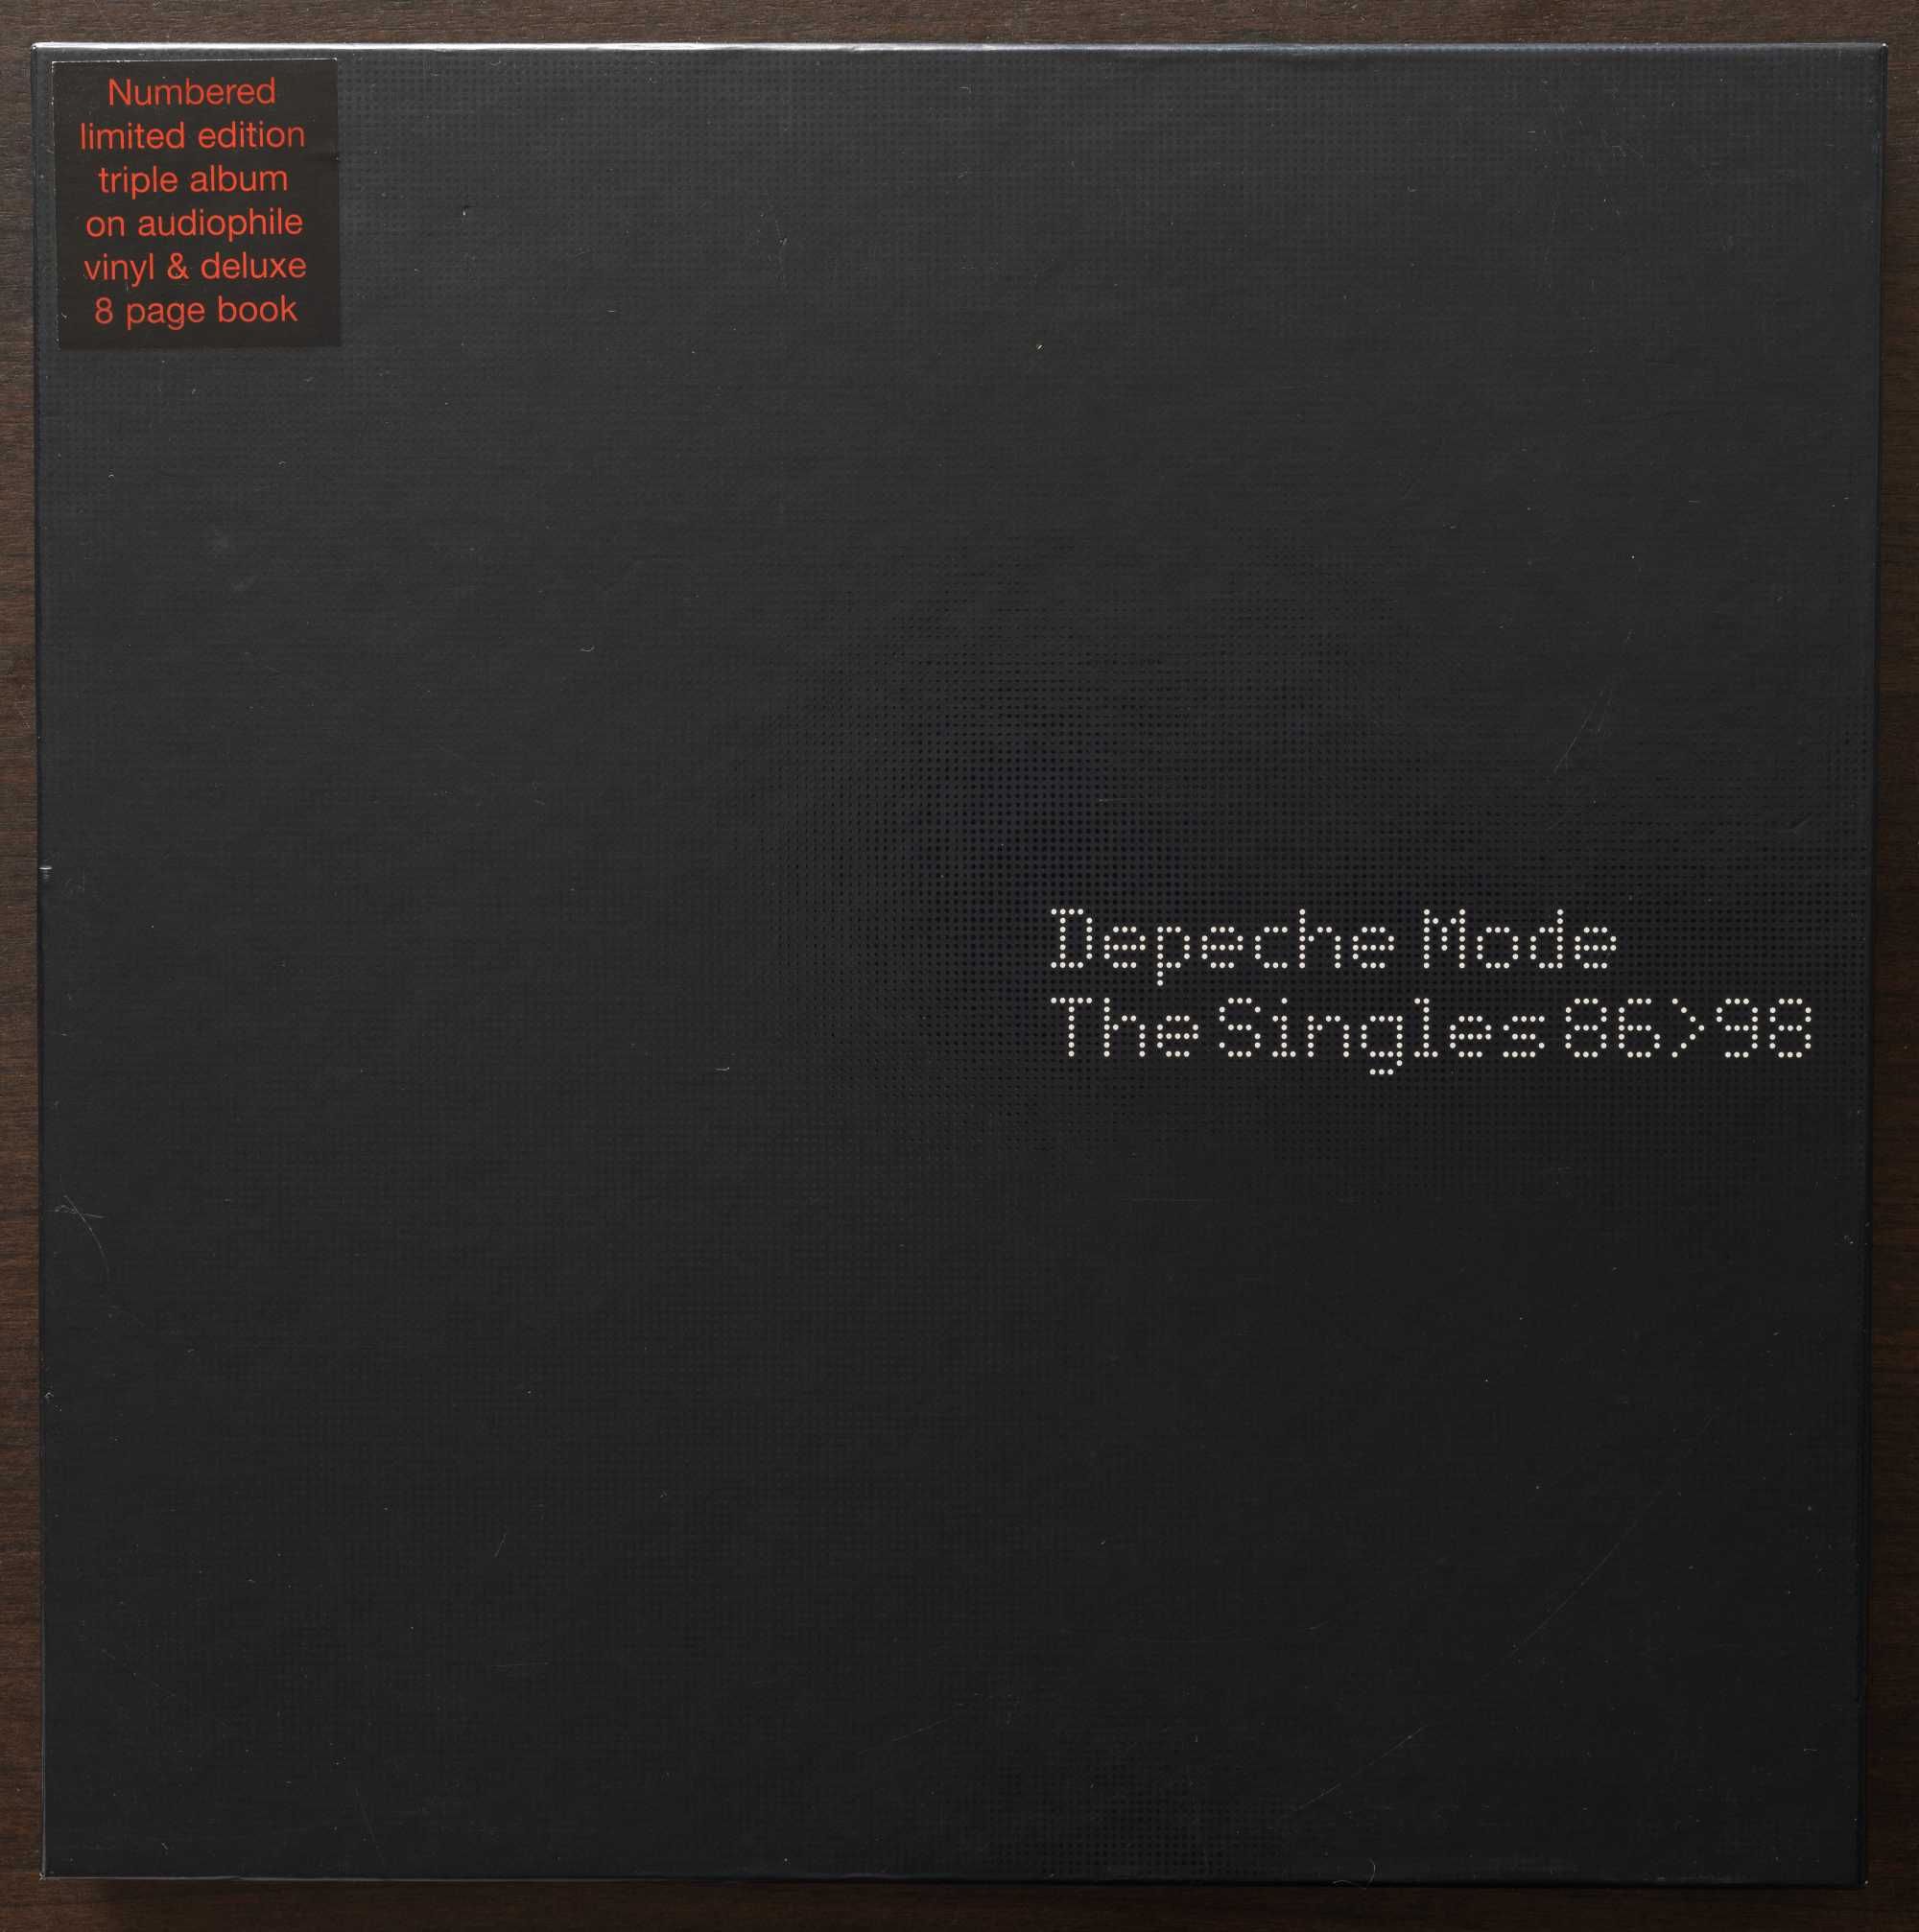 Depeche Mode - The Singles 86>98 Box 3x winyl